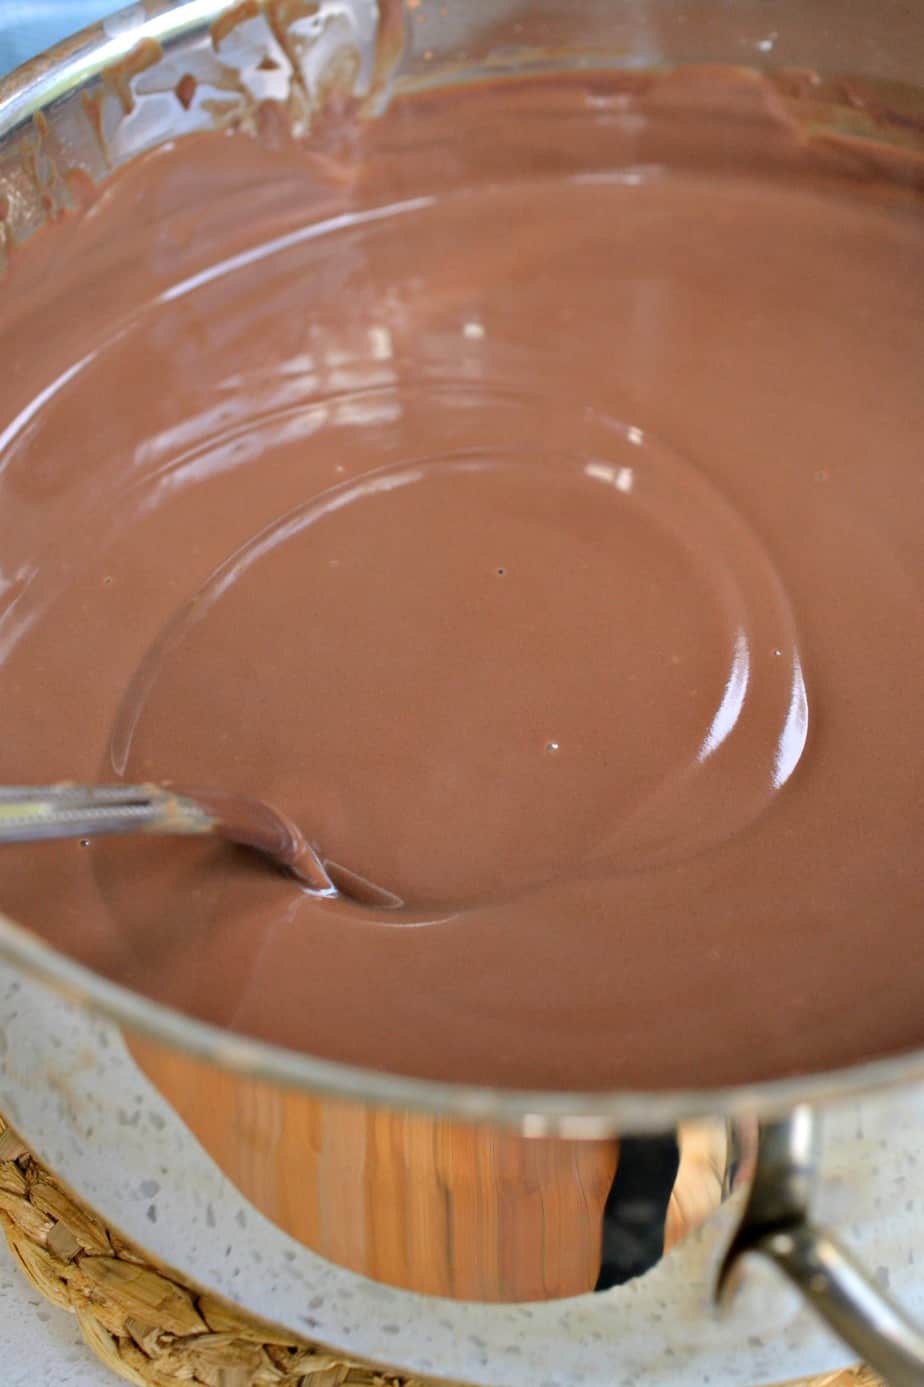 How to make Chocolate Pudding